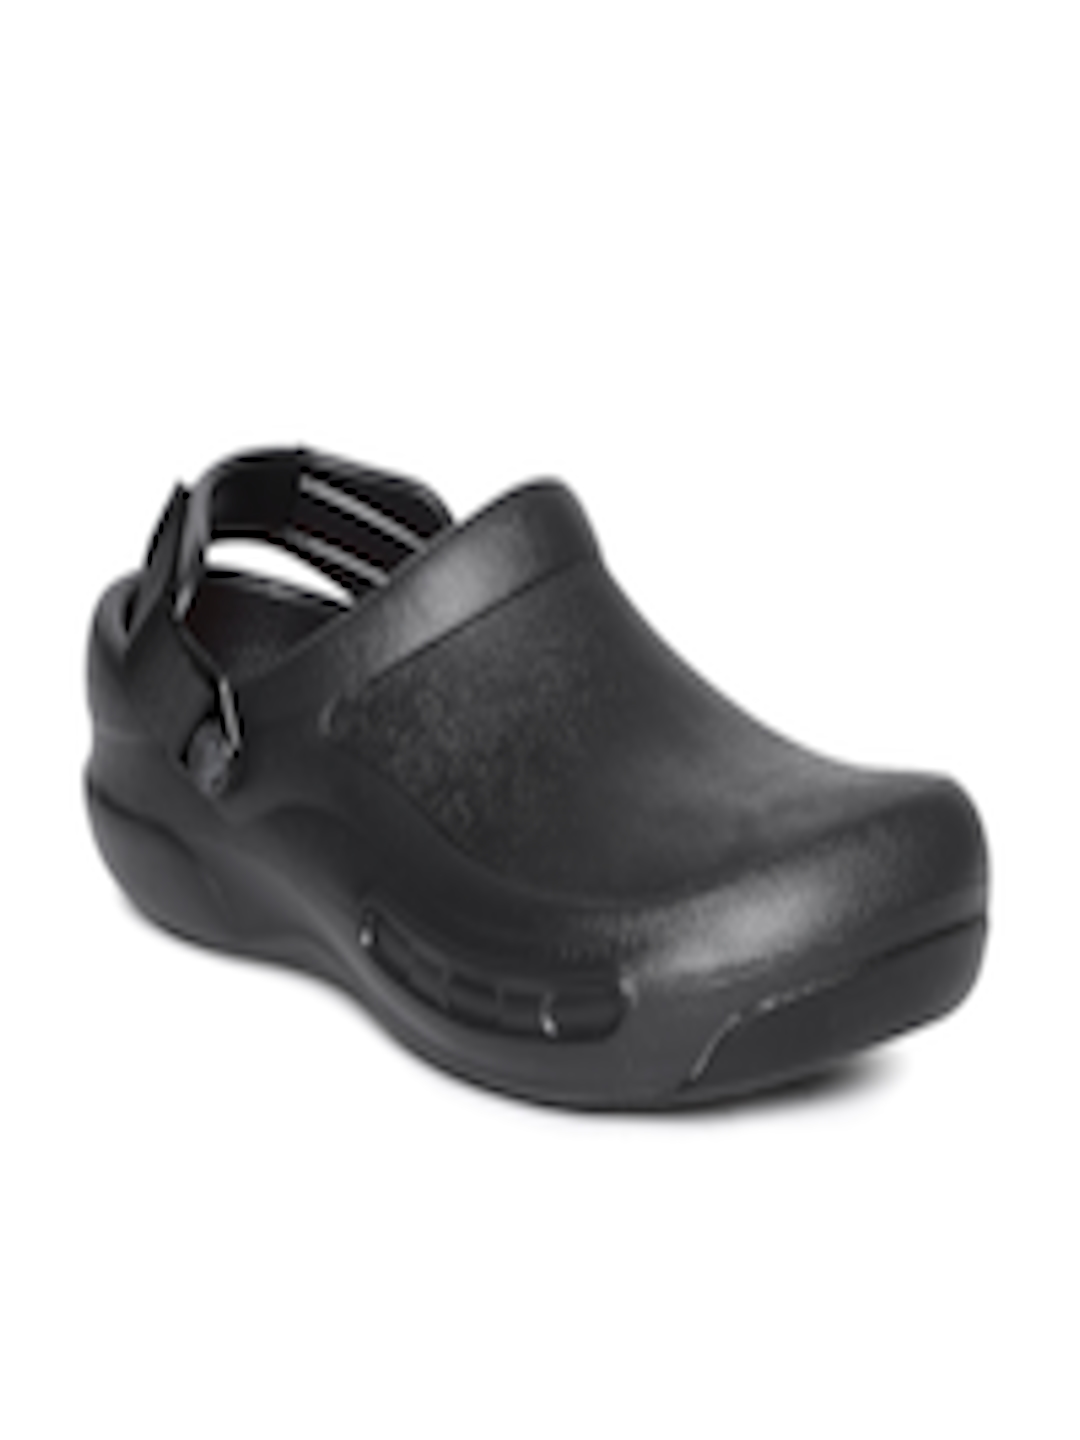 Buy Crocs Bistro Unisex Black Solid Clogs - Flip Flops for Unisex ...